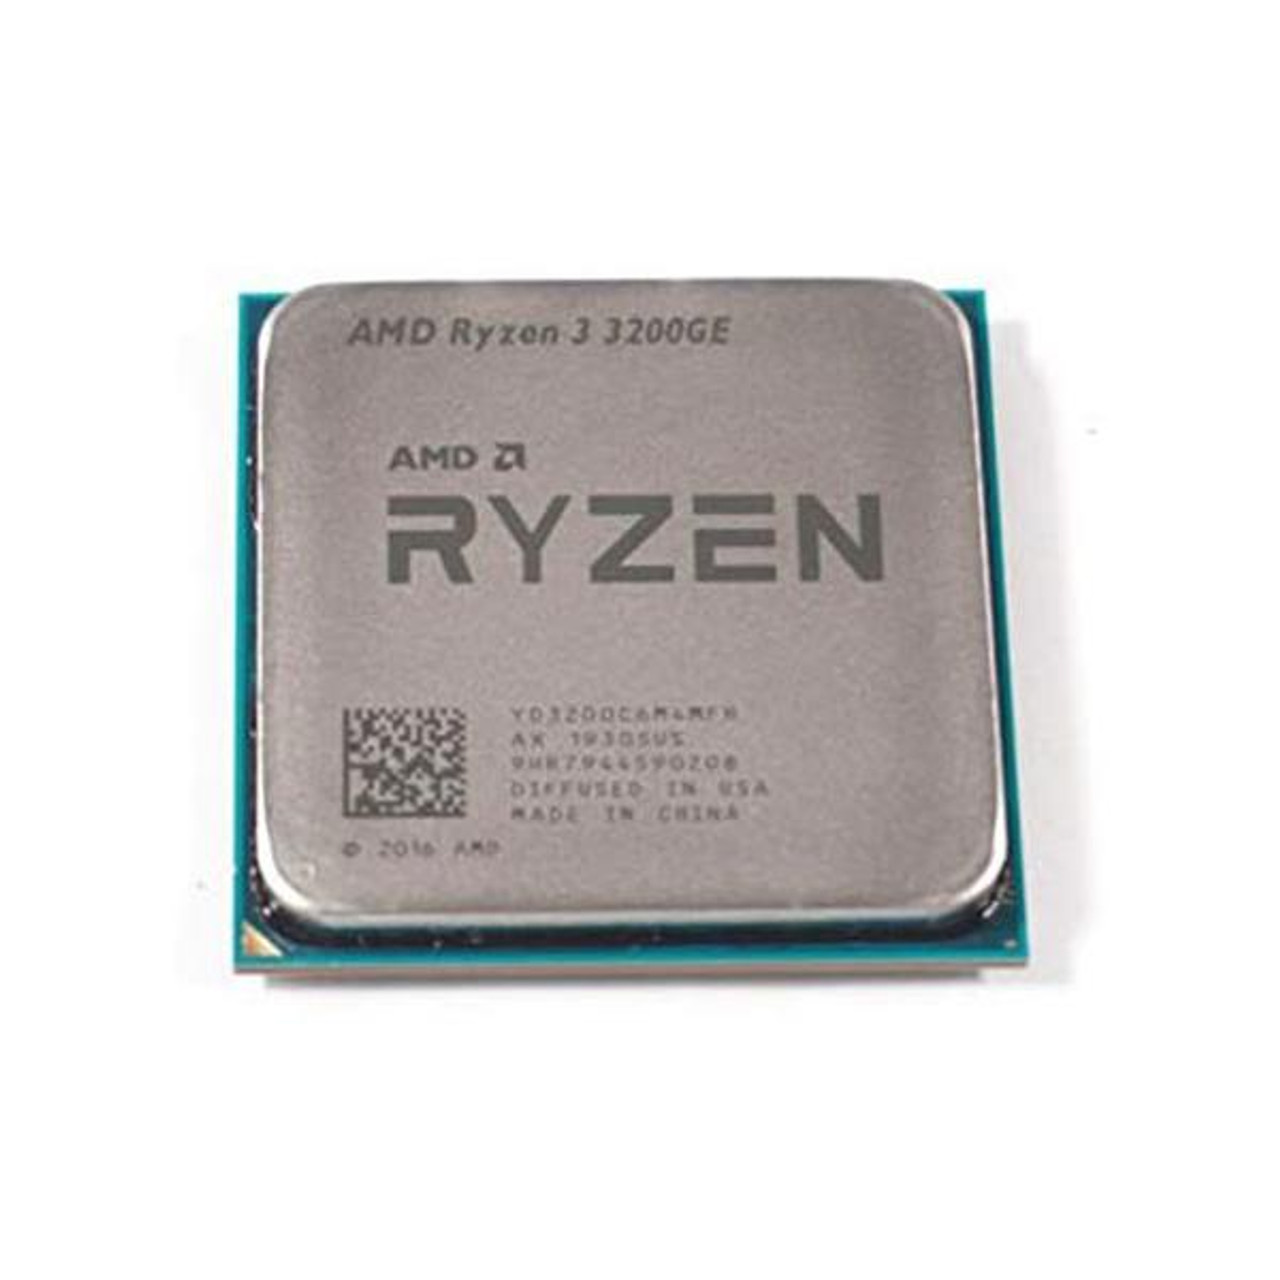 AMD Ryzen 3 3200GE Quad-Core 3.30GHz 4MB L3 Cache Socket AM4 Processor